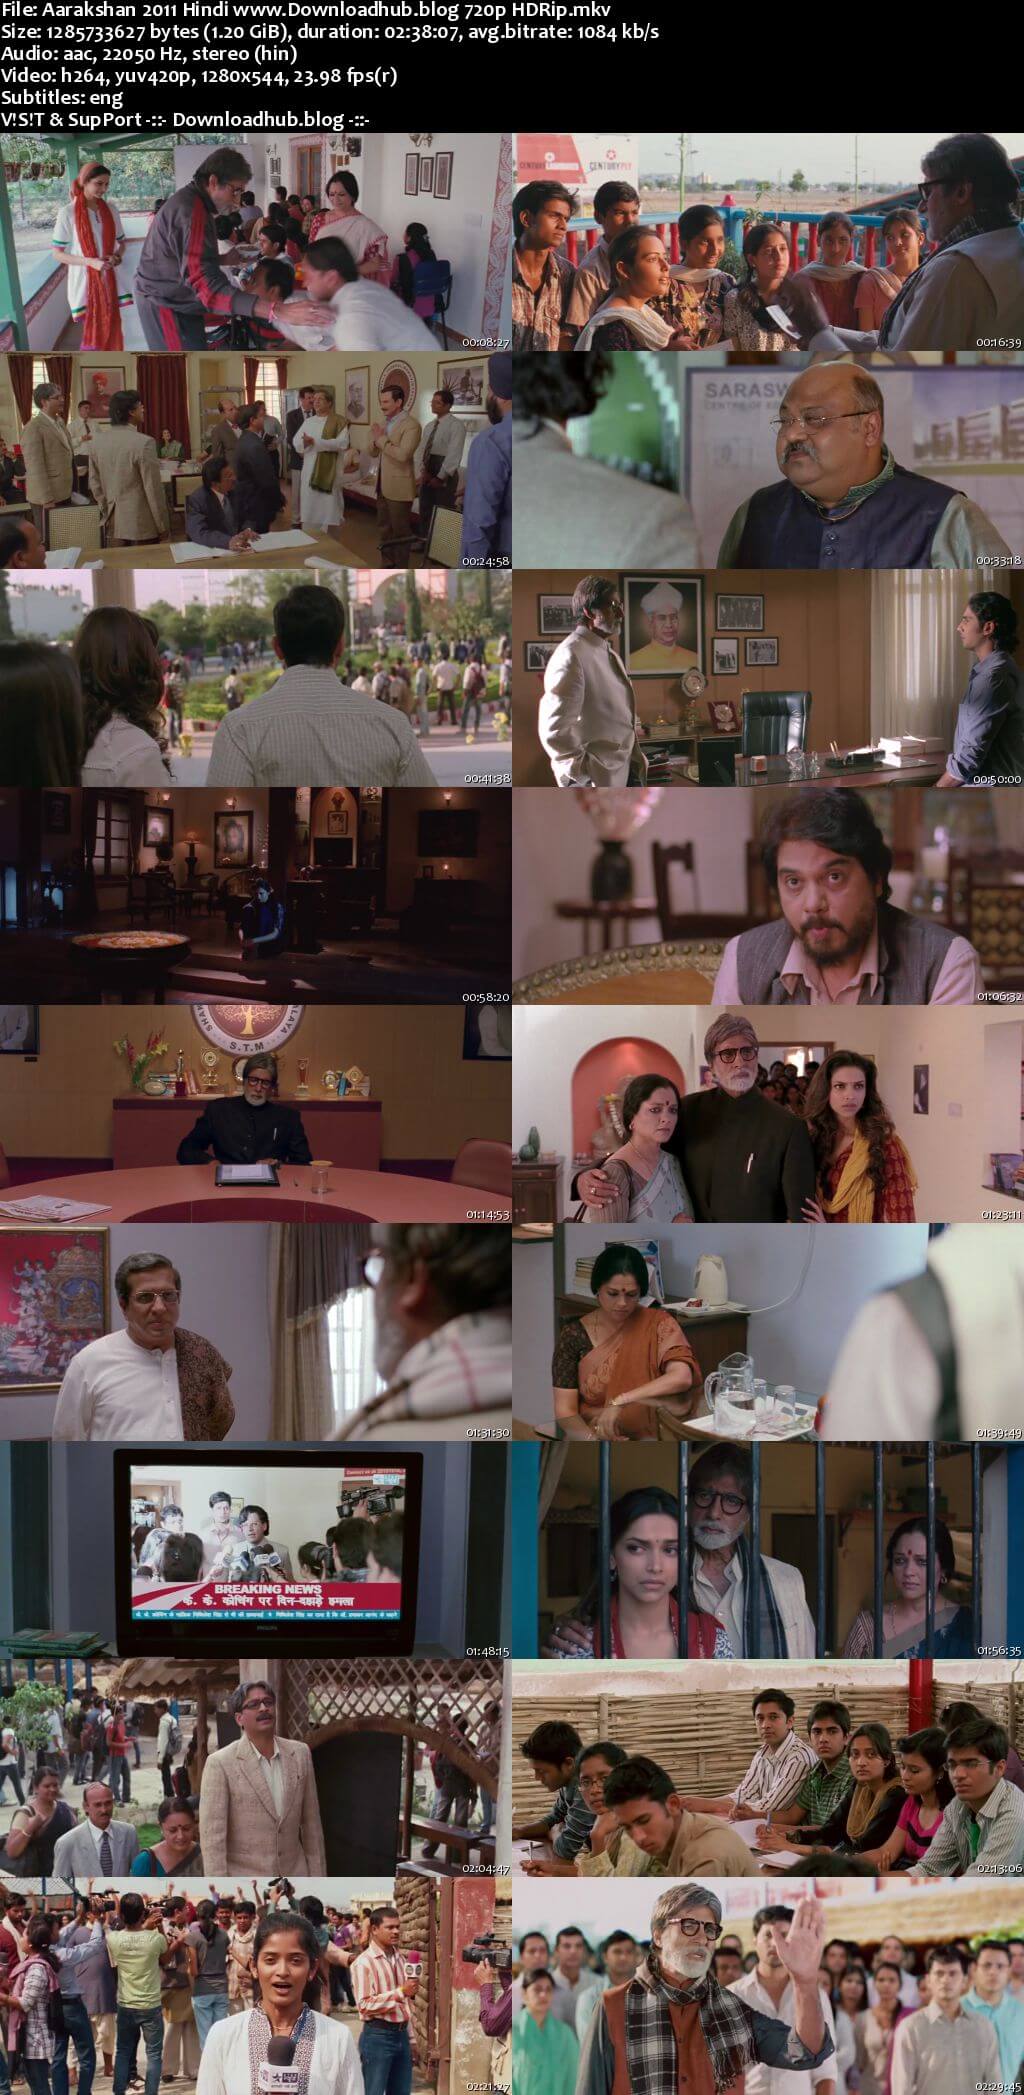 Aarakshan 2011 Hindi 720p HDRip ESubs